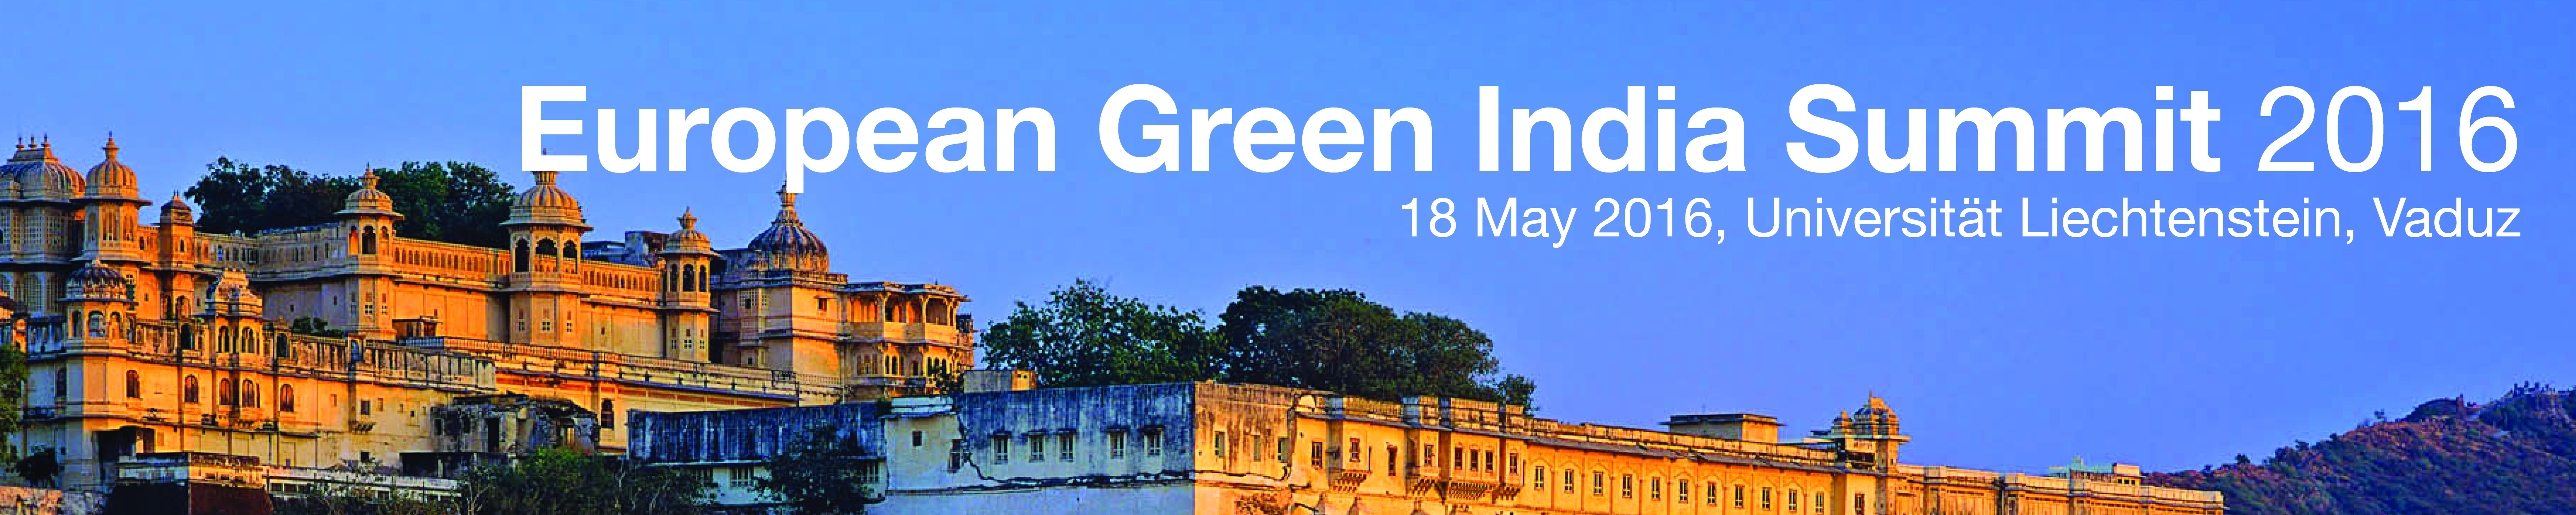 European_Green_India_Summit_Banner.jpg